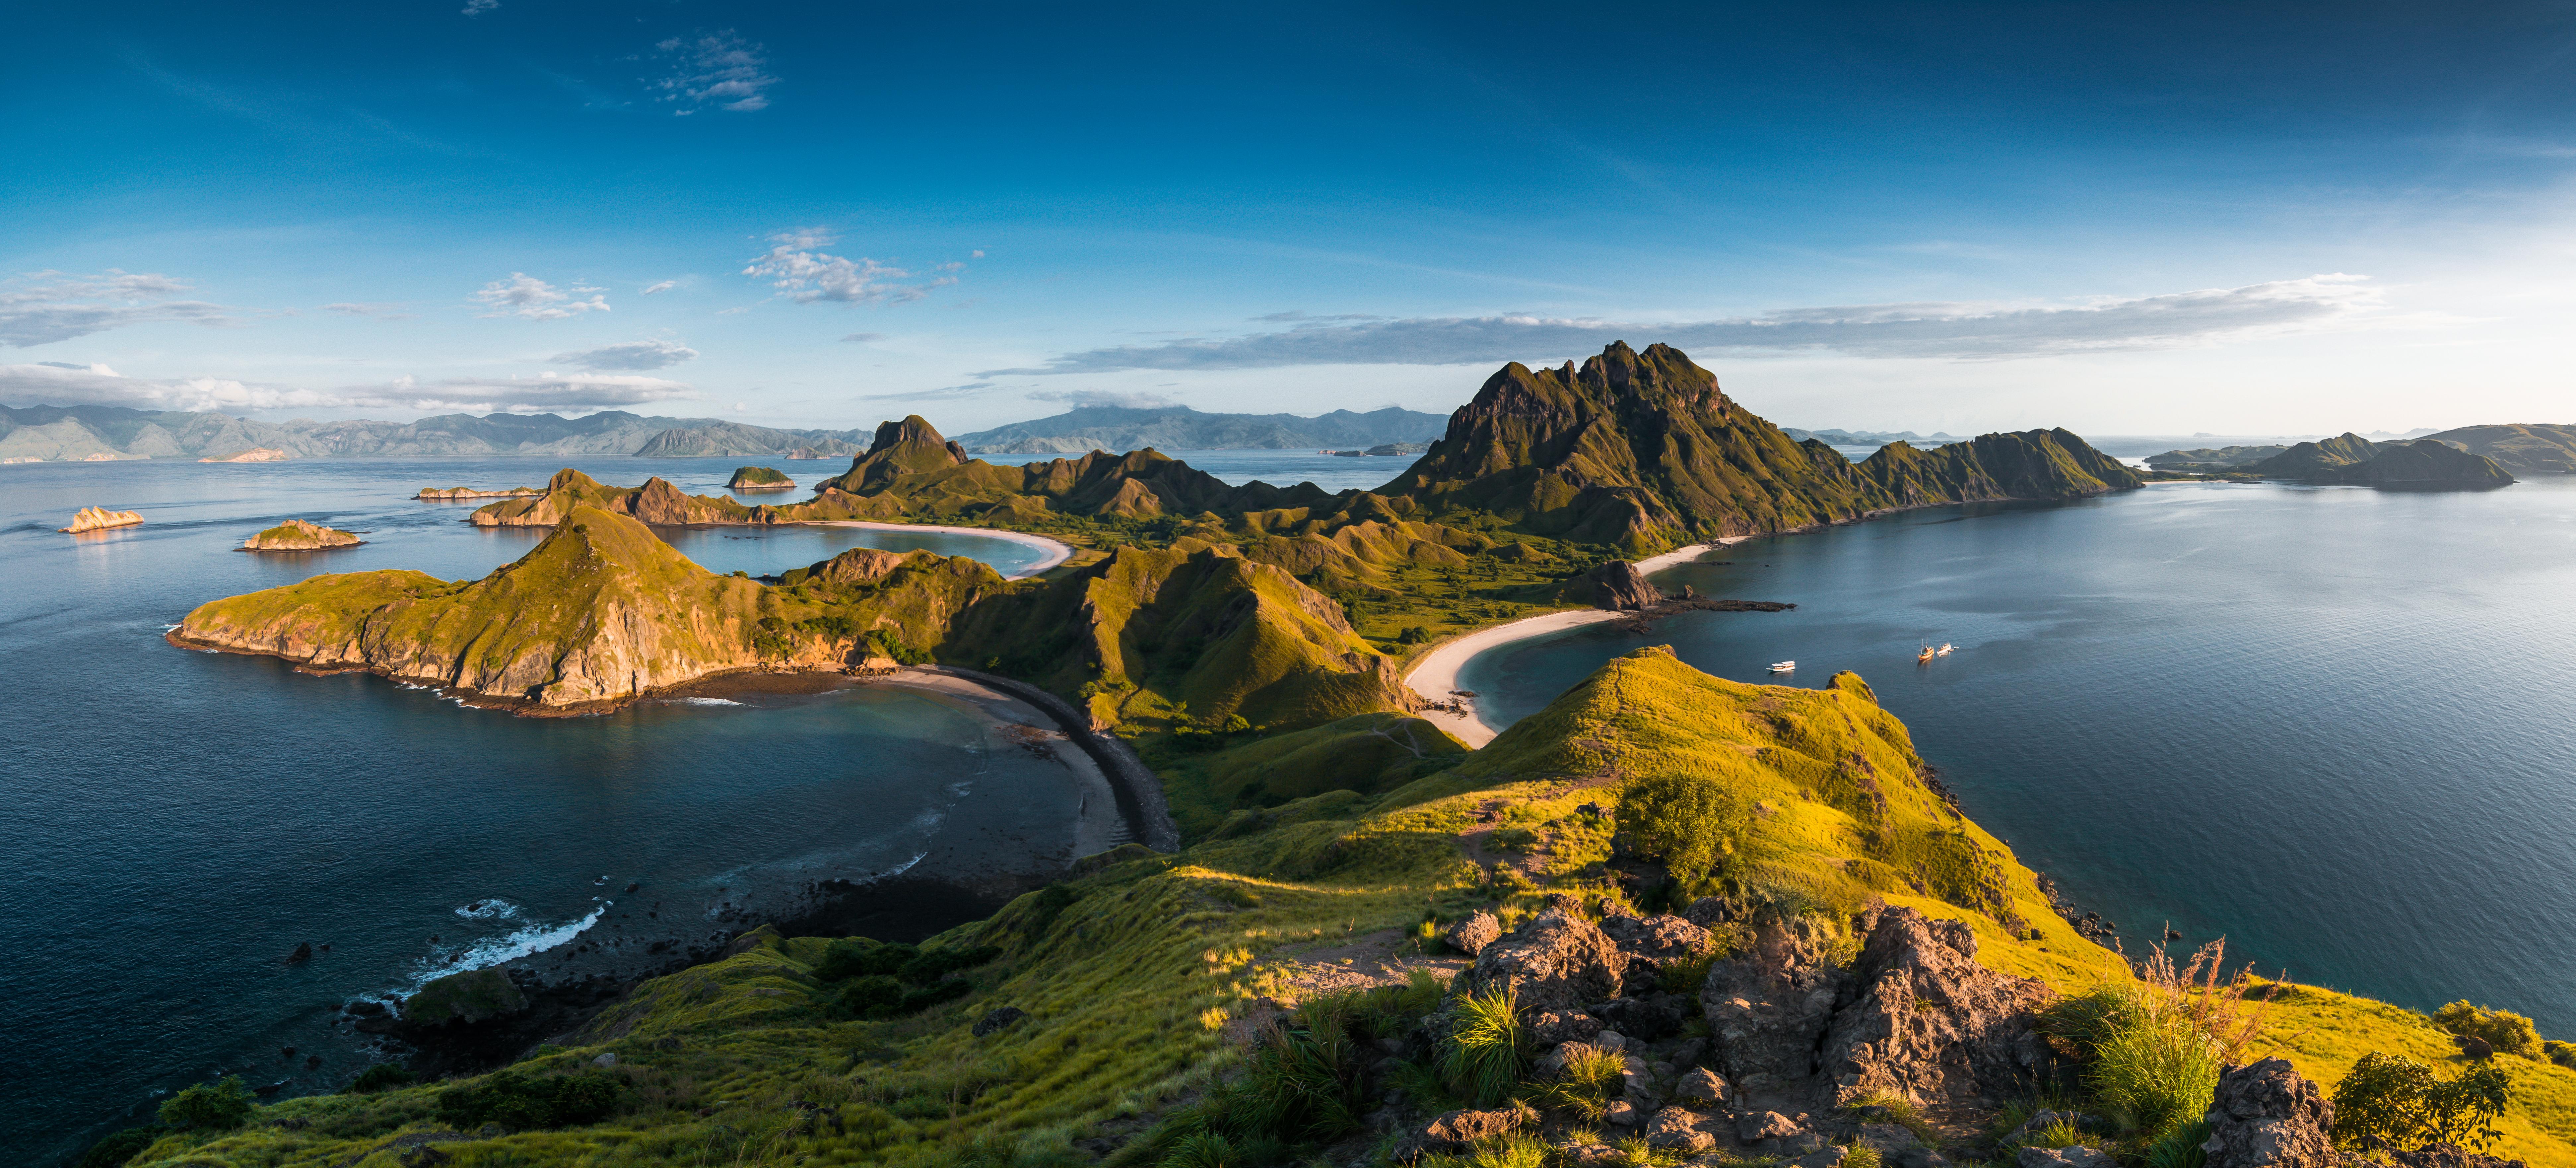 Pemandangan pulau Padar, Kepulauan Komodo, Nusa Tenggara Timur (Shutterstock)